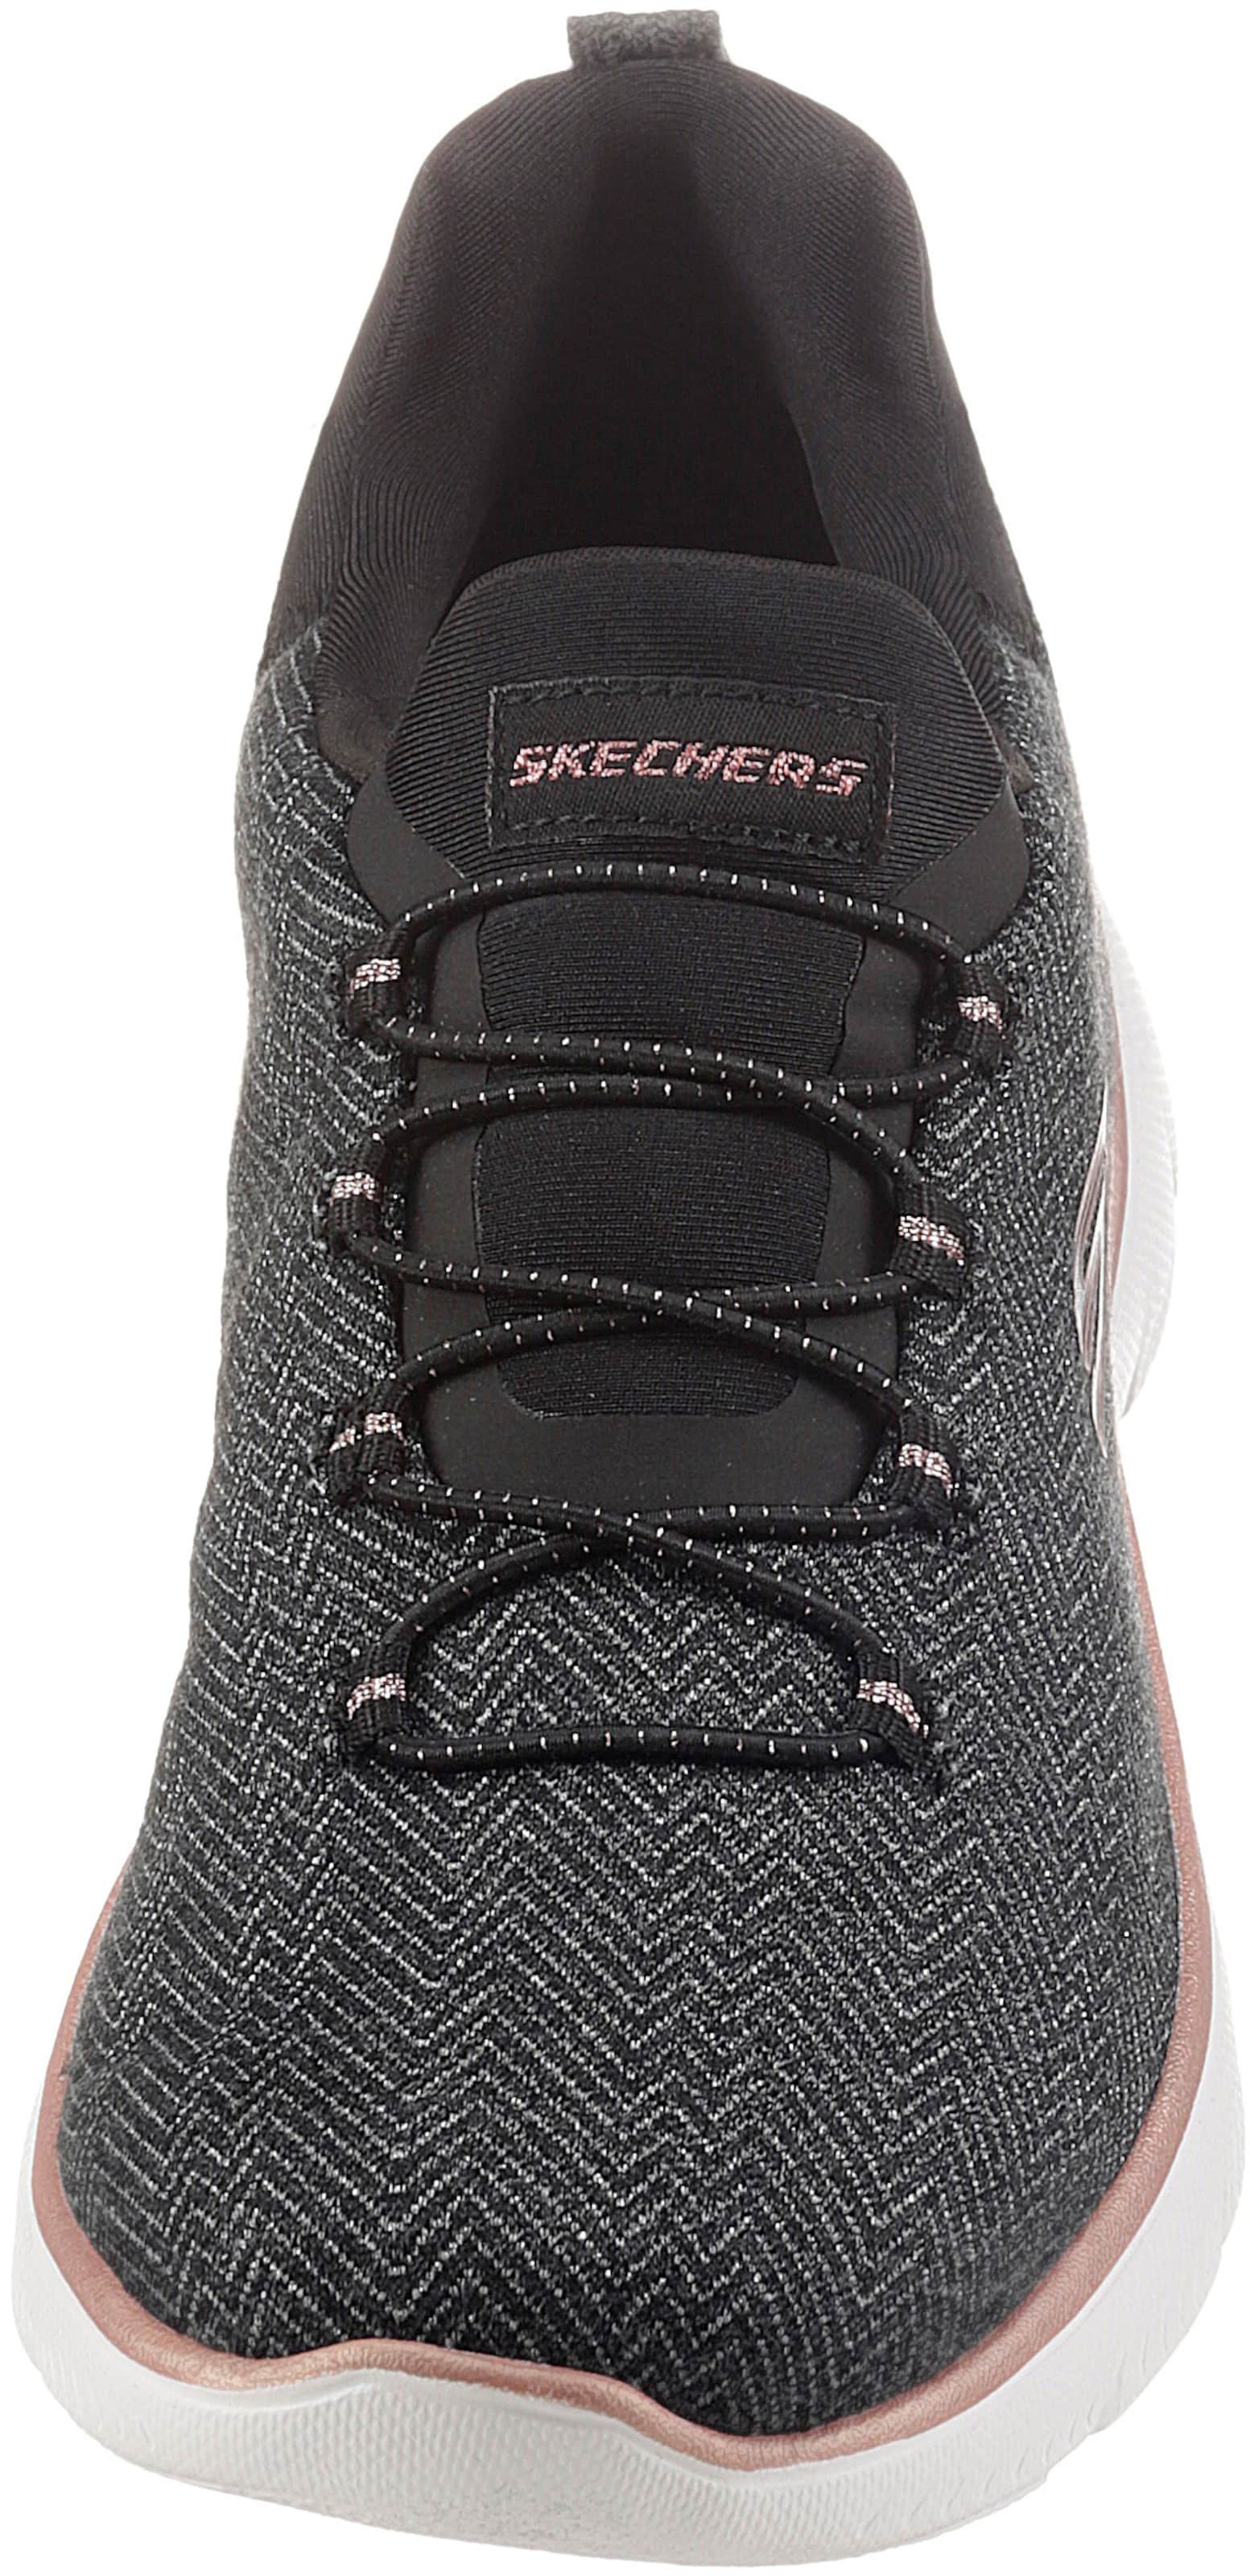 Slip in günstig Kaufen-Slip-On Sneaker in schwarz-meliert von Skechers. Slip-On Sneaker in schwarz-meliert von Skechers <![CDATA[Slipper, Skechers, Textil-Synthetik kombiniert]]>. 